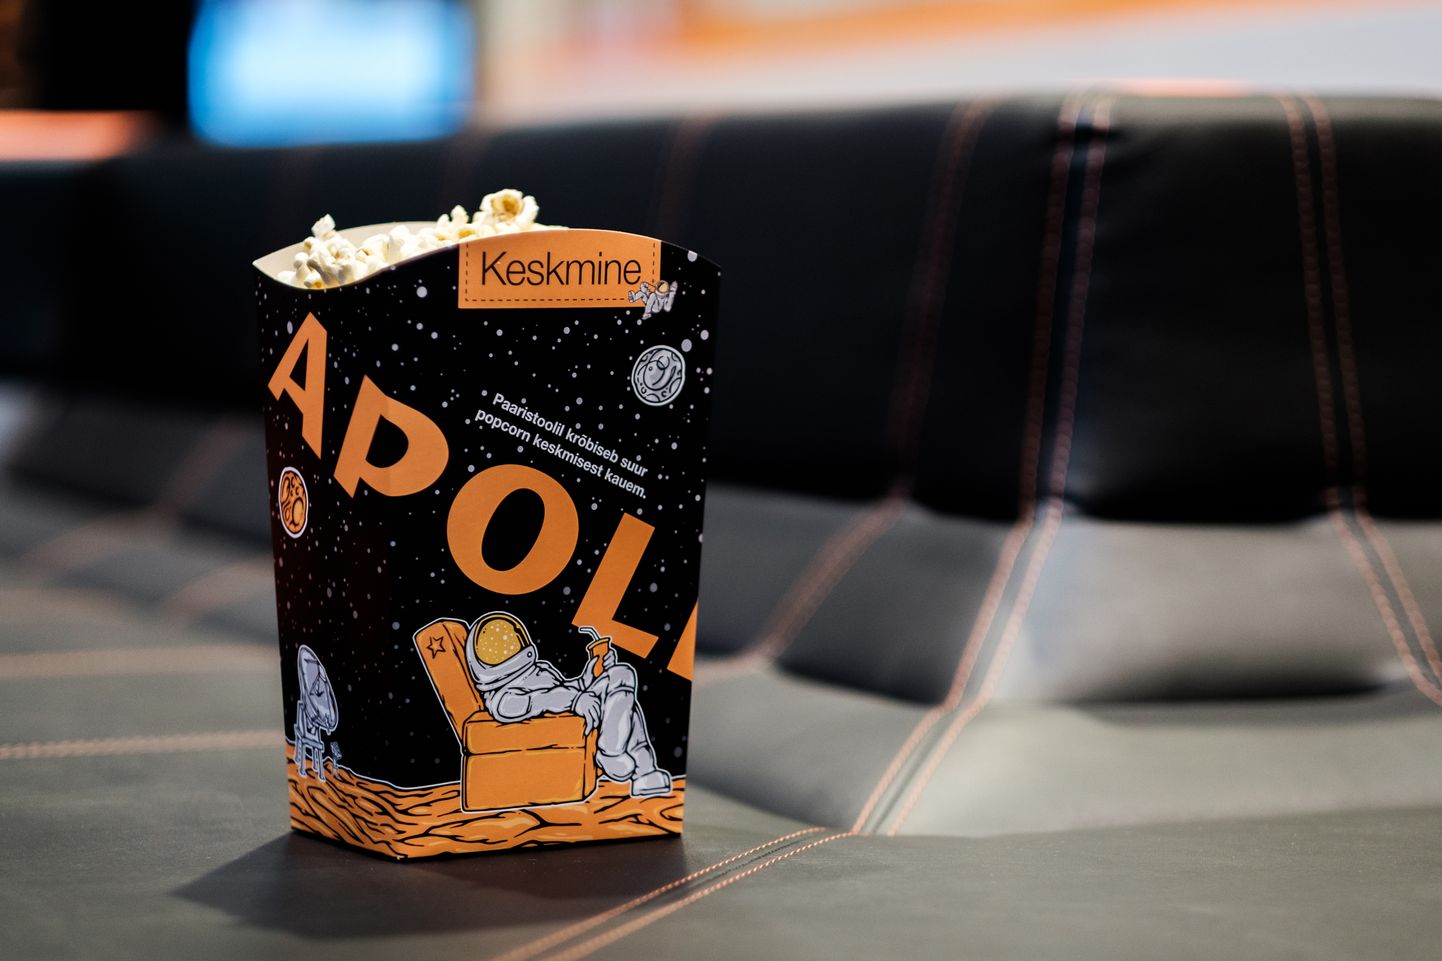 Apollo Kino popcorn